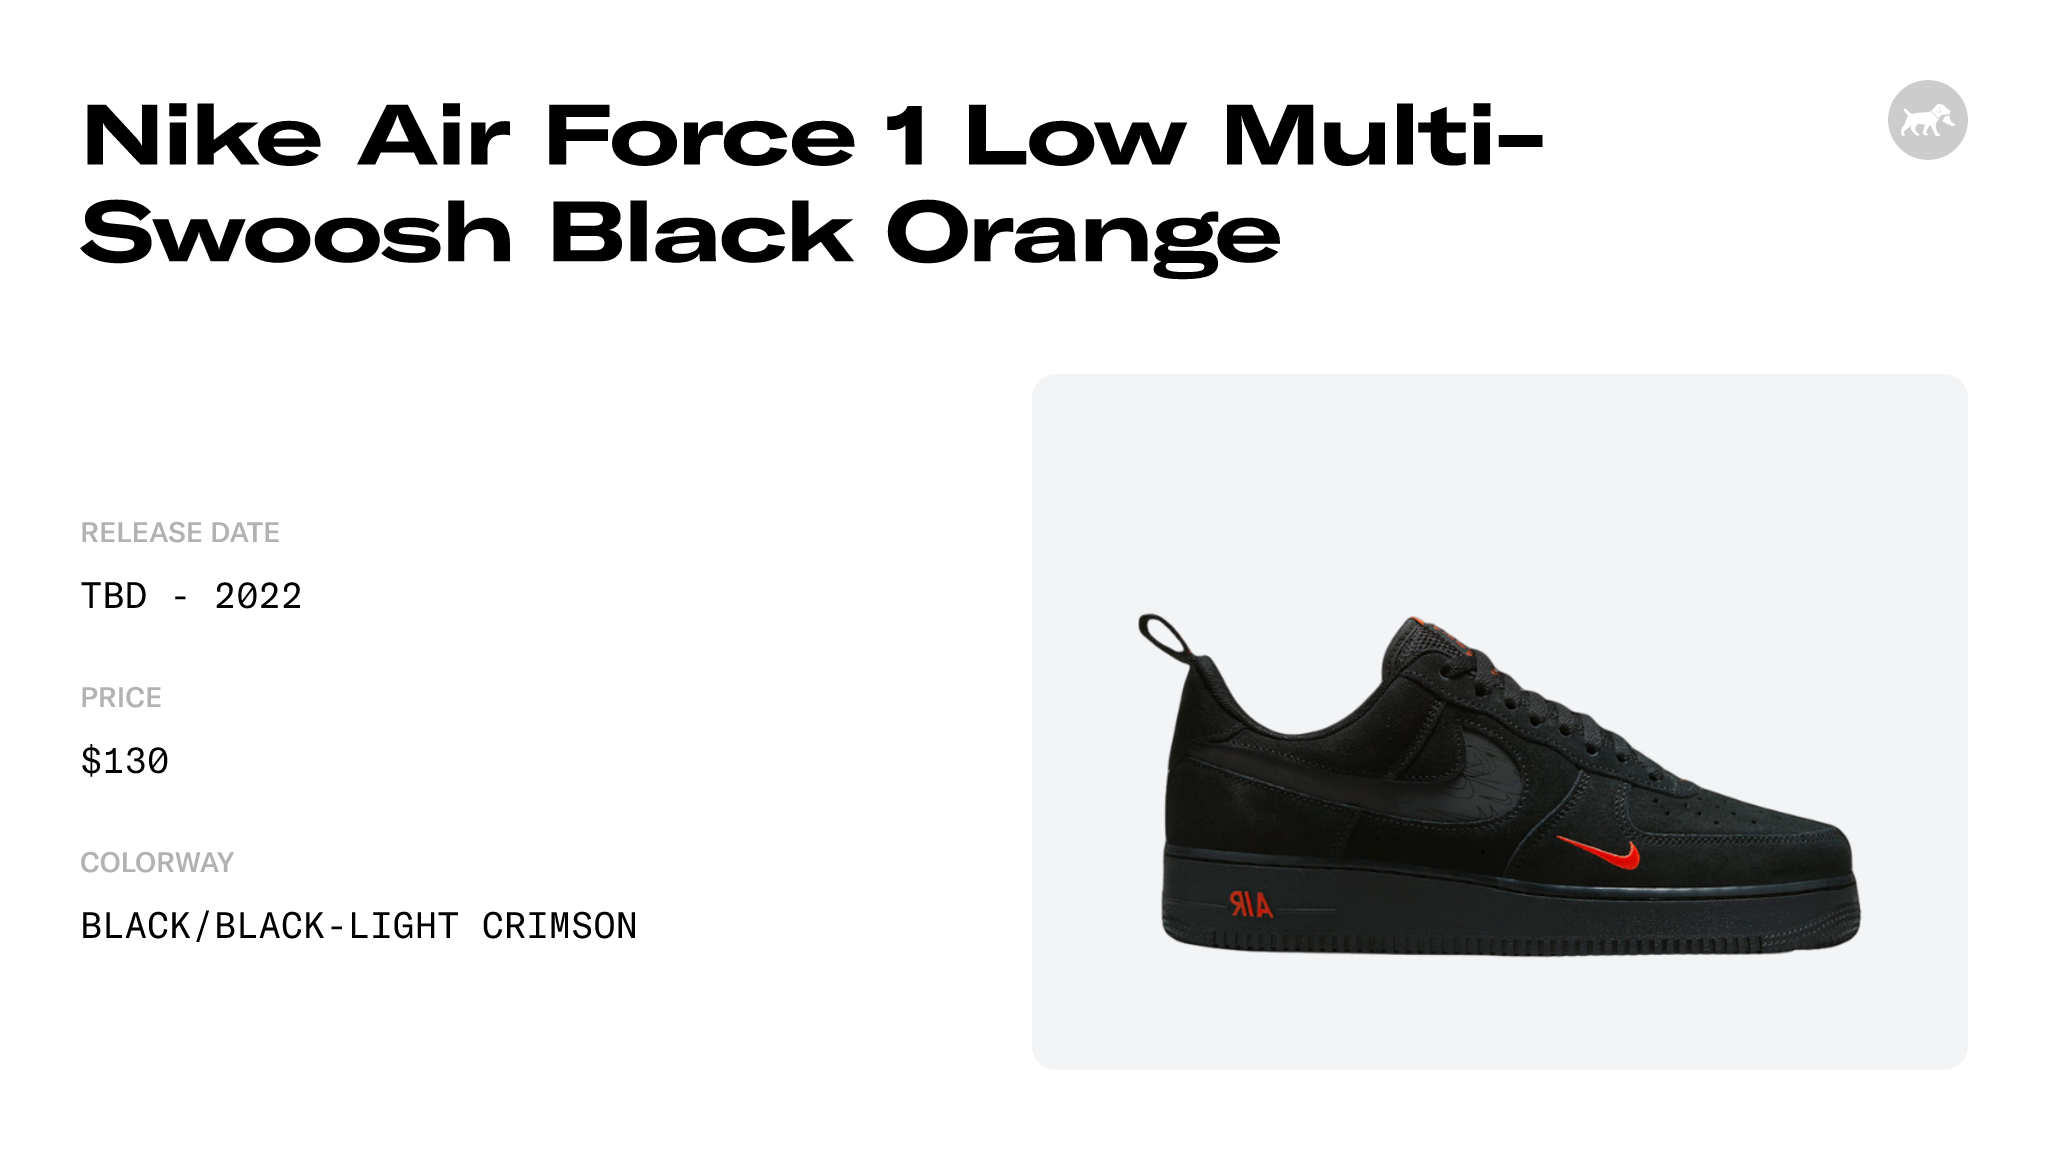 Nike Air Force 1 Low Multi-Swoosh Black Orange Raffles and Release Date